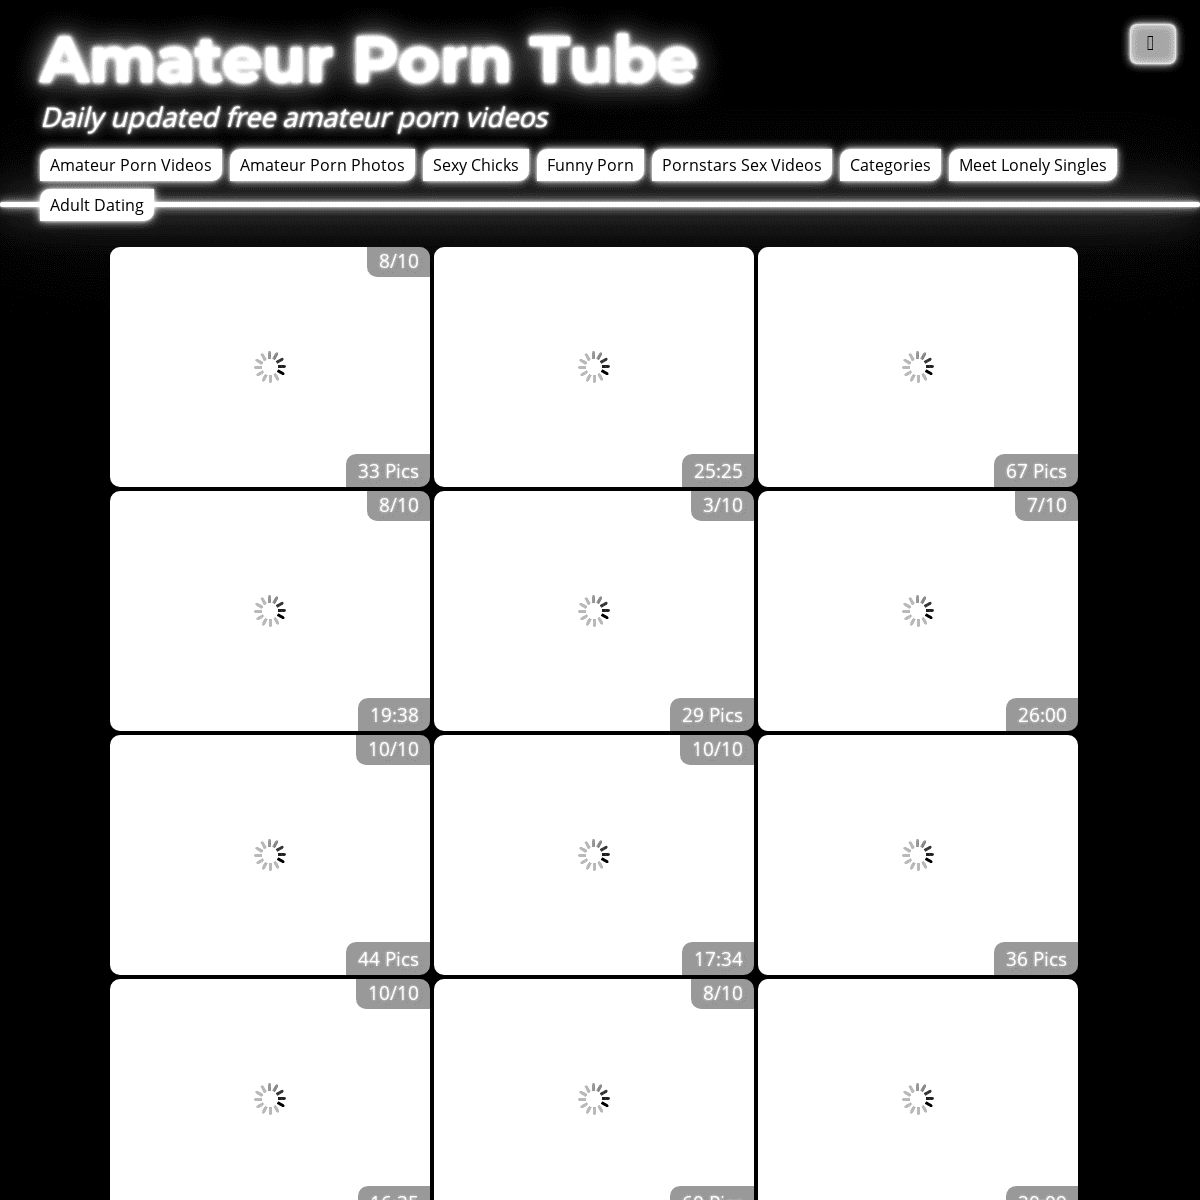 Amateur Porn Tube - Daily updated free amateur porn videos